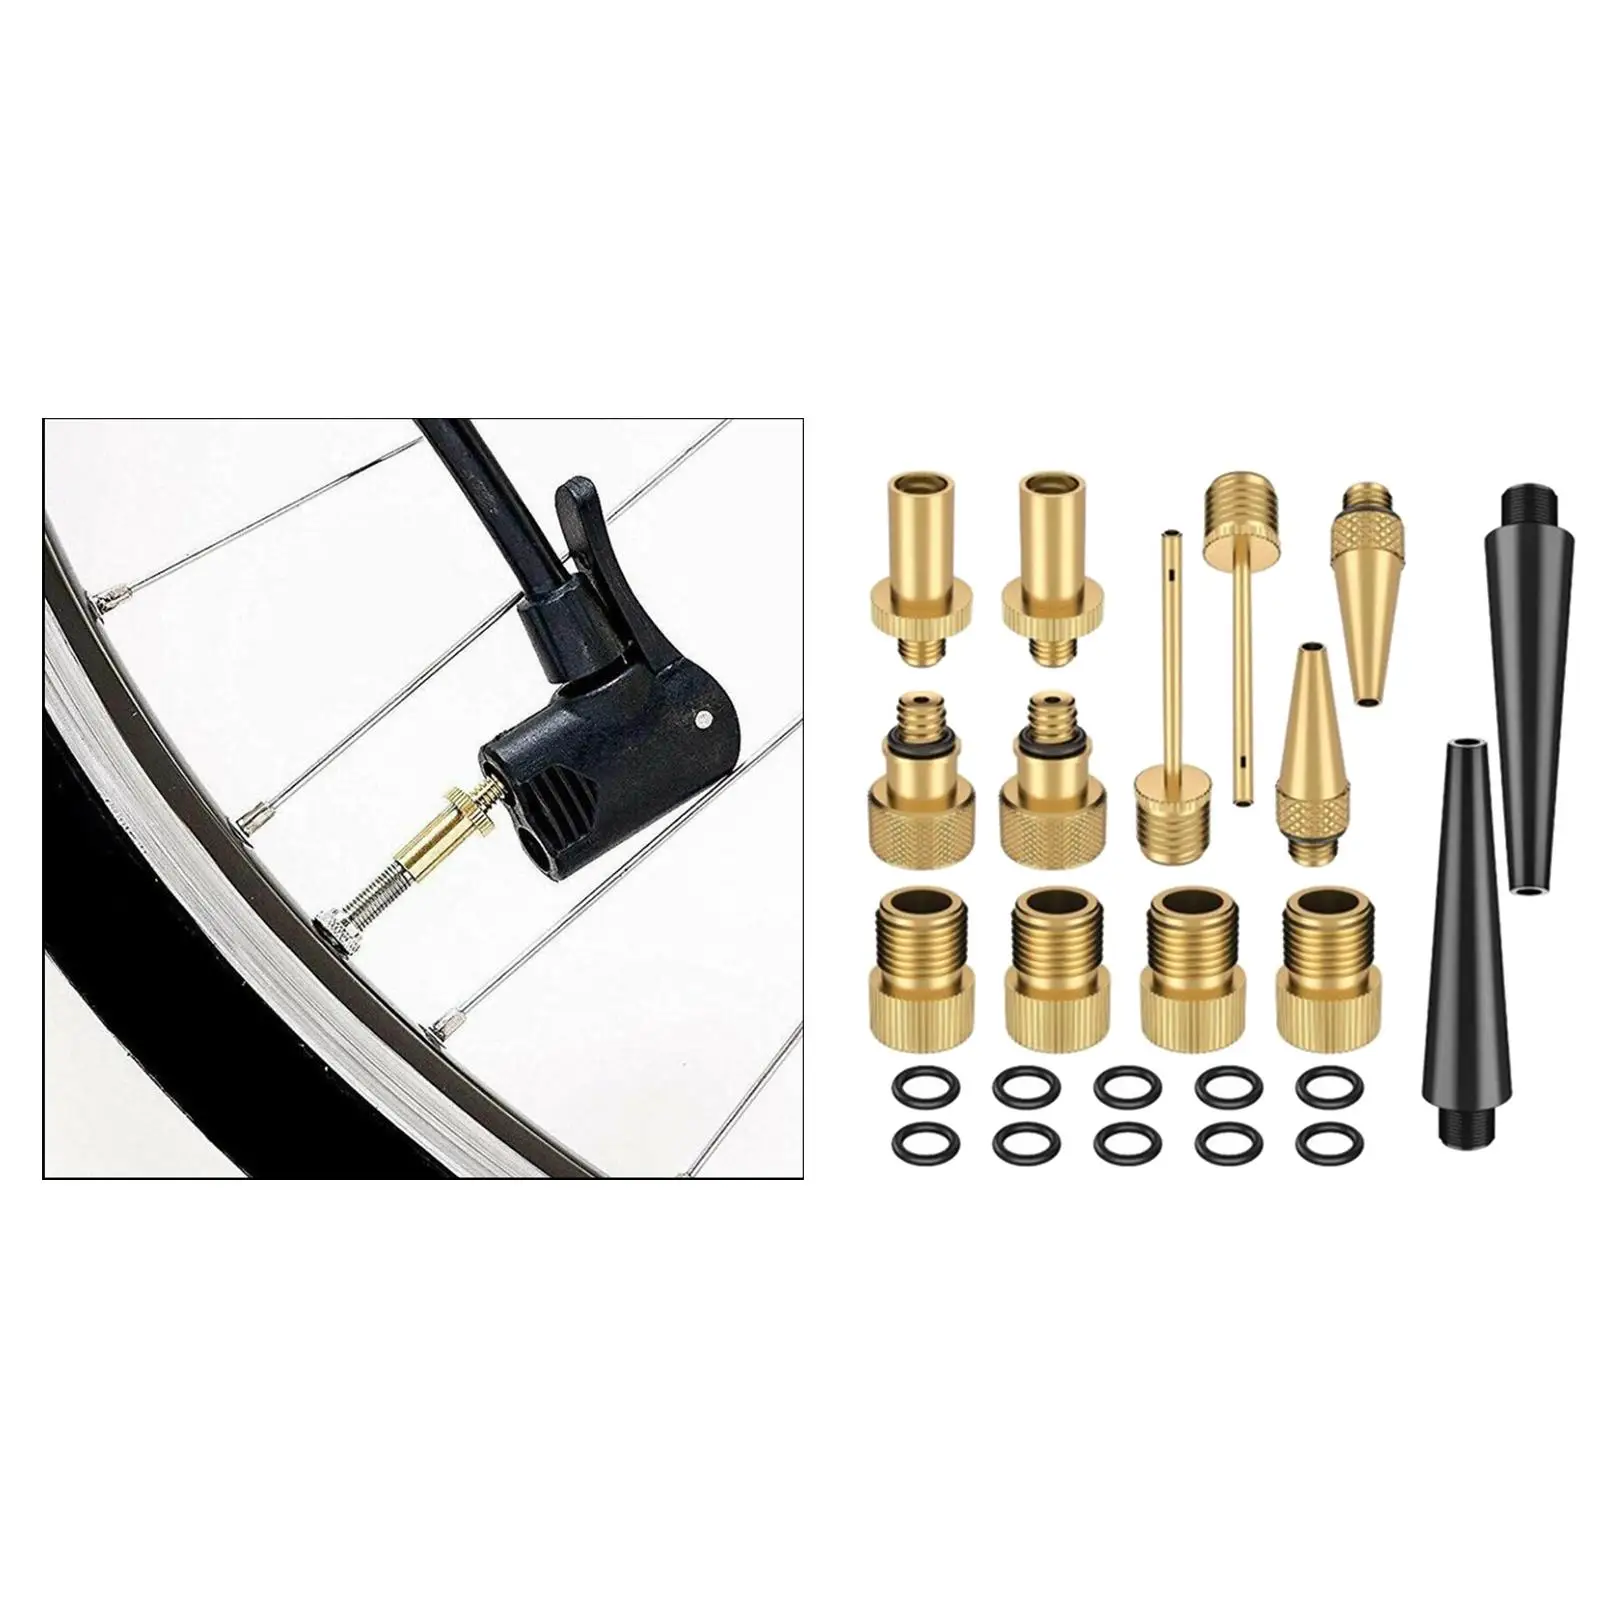 Copper  Adapter,  Presta, /Woods Tyre Adaptor,  Tire Pump Adapter   Pump Nozzle